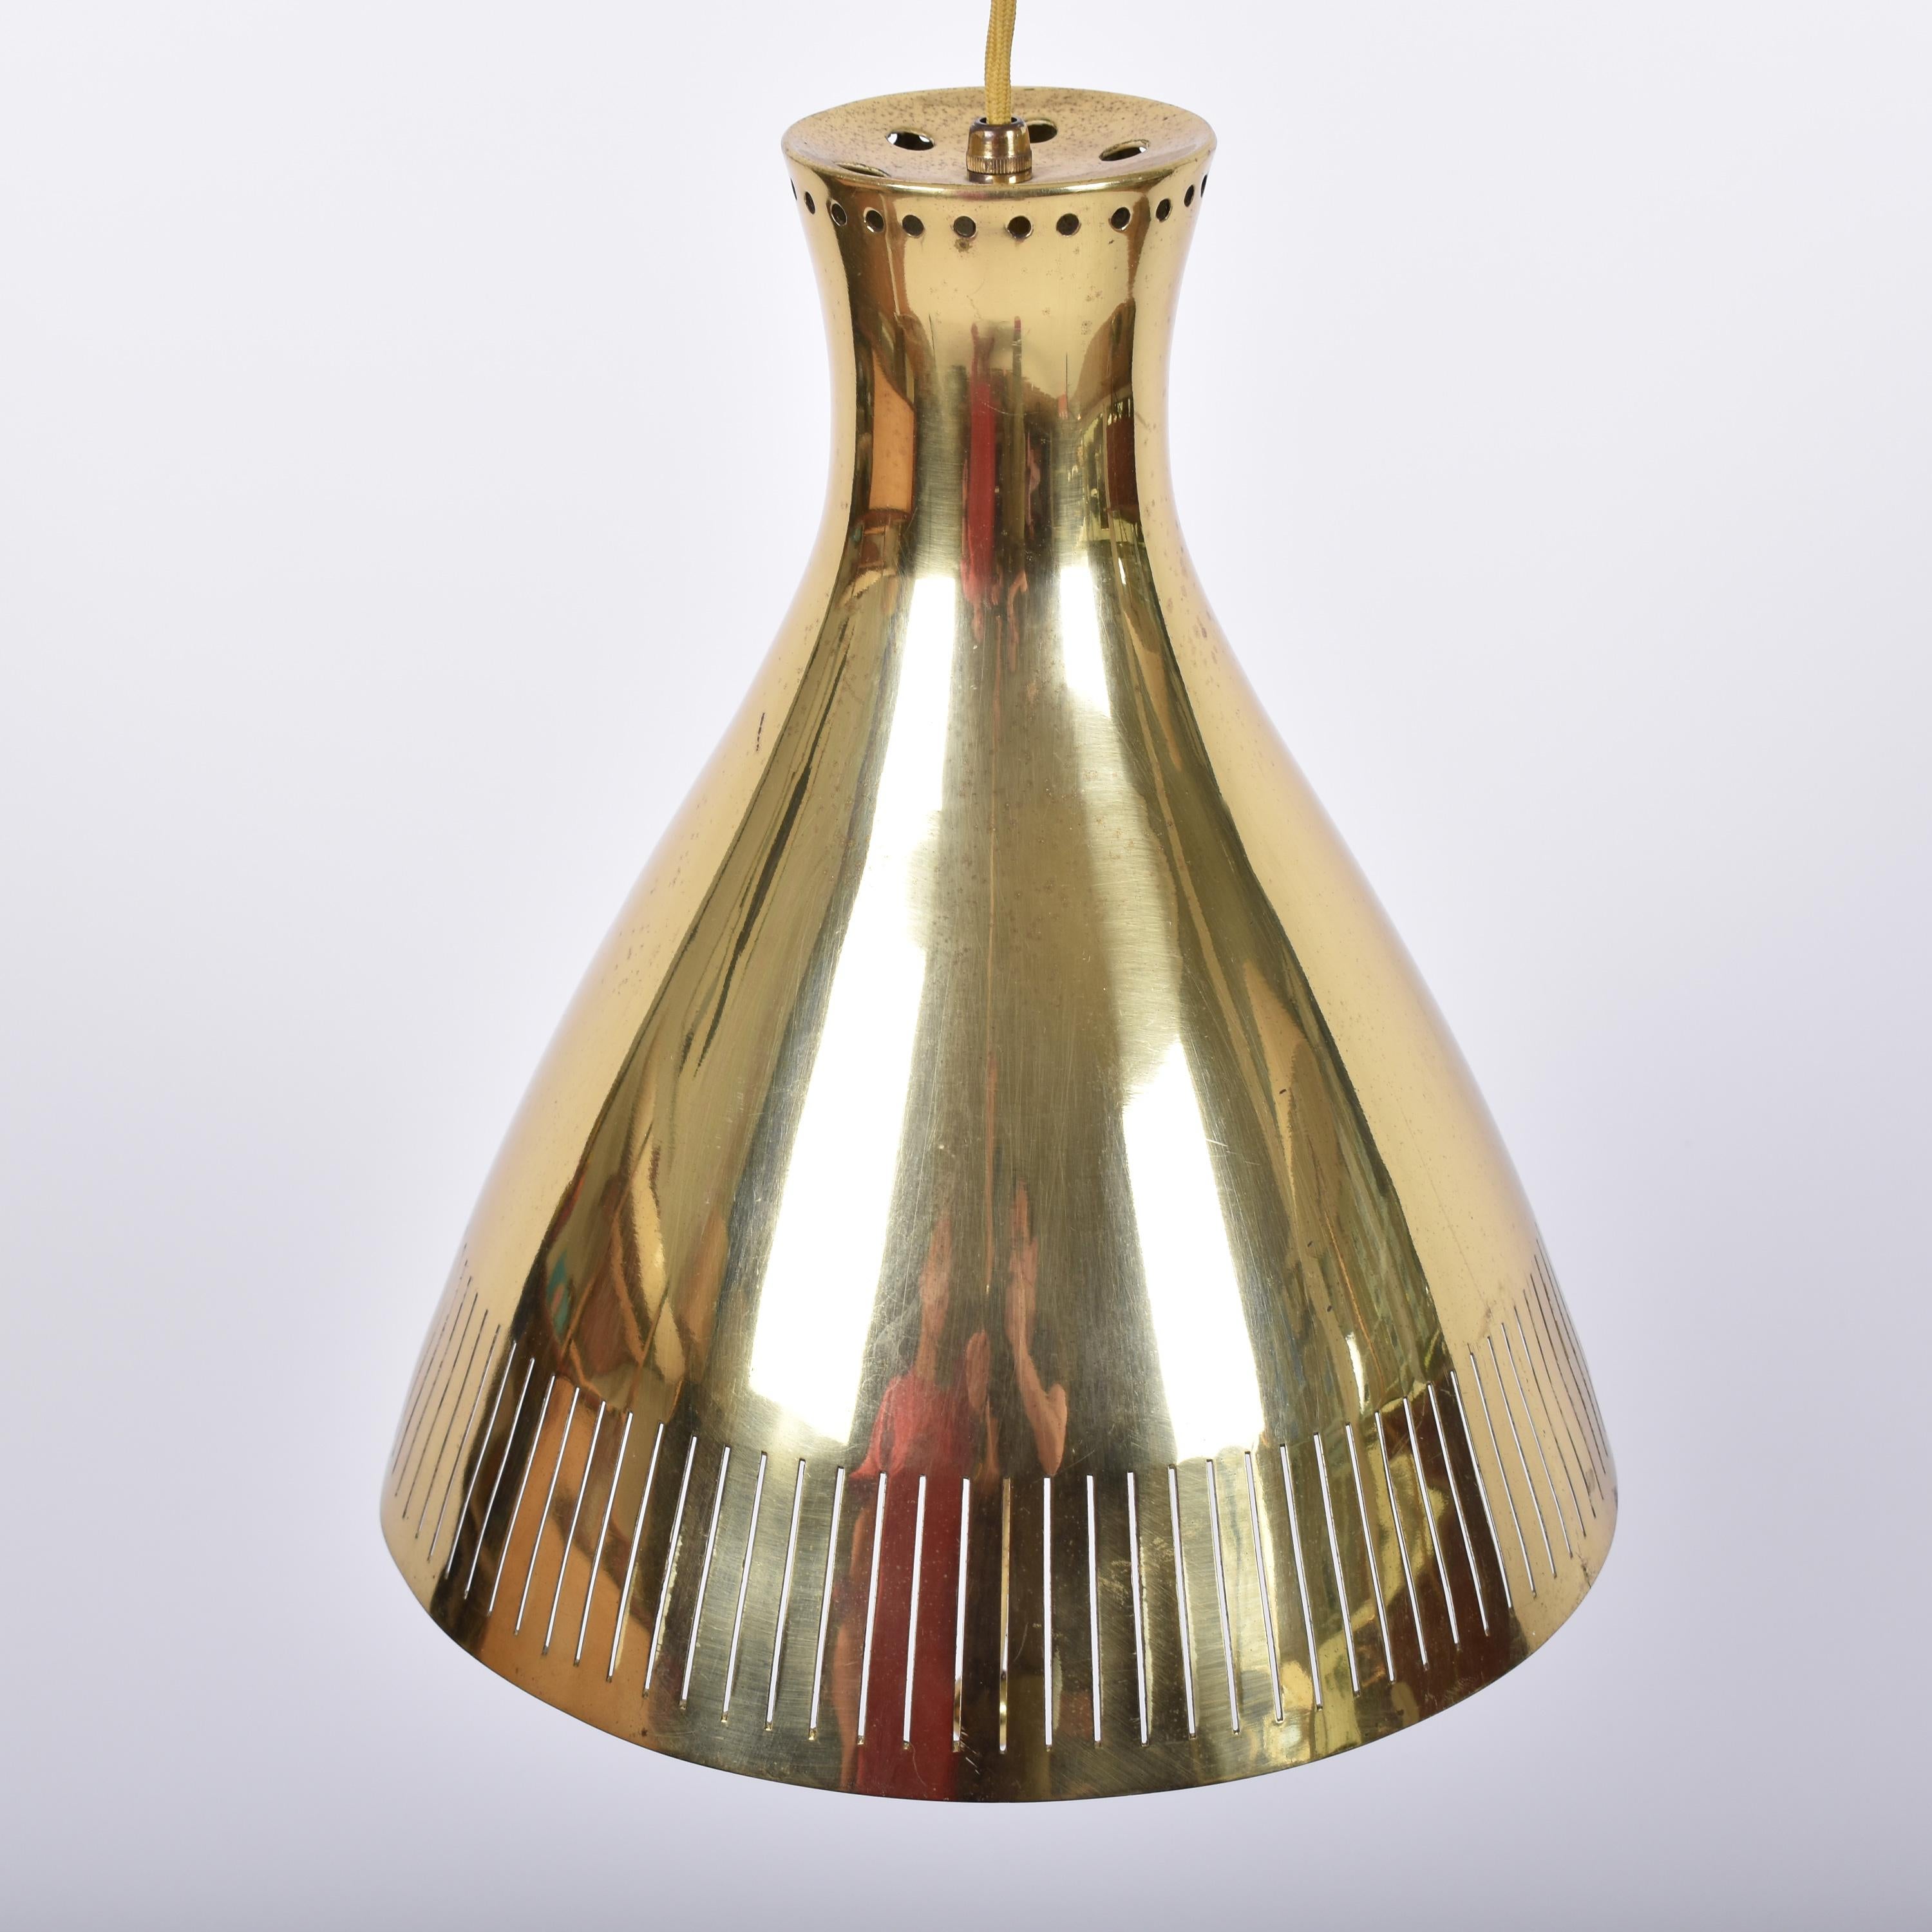 Polished Mid-Century Modern Brass Pendant Lamp by Vereinigte Werkstätten 1960s Germany For Sale